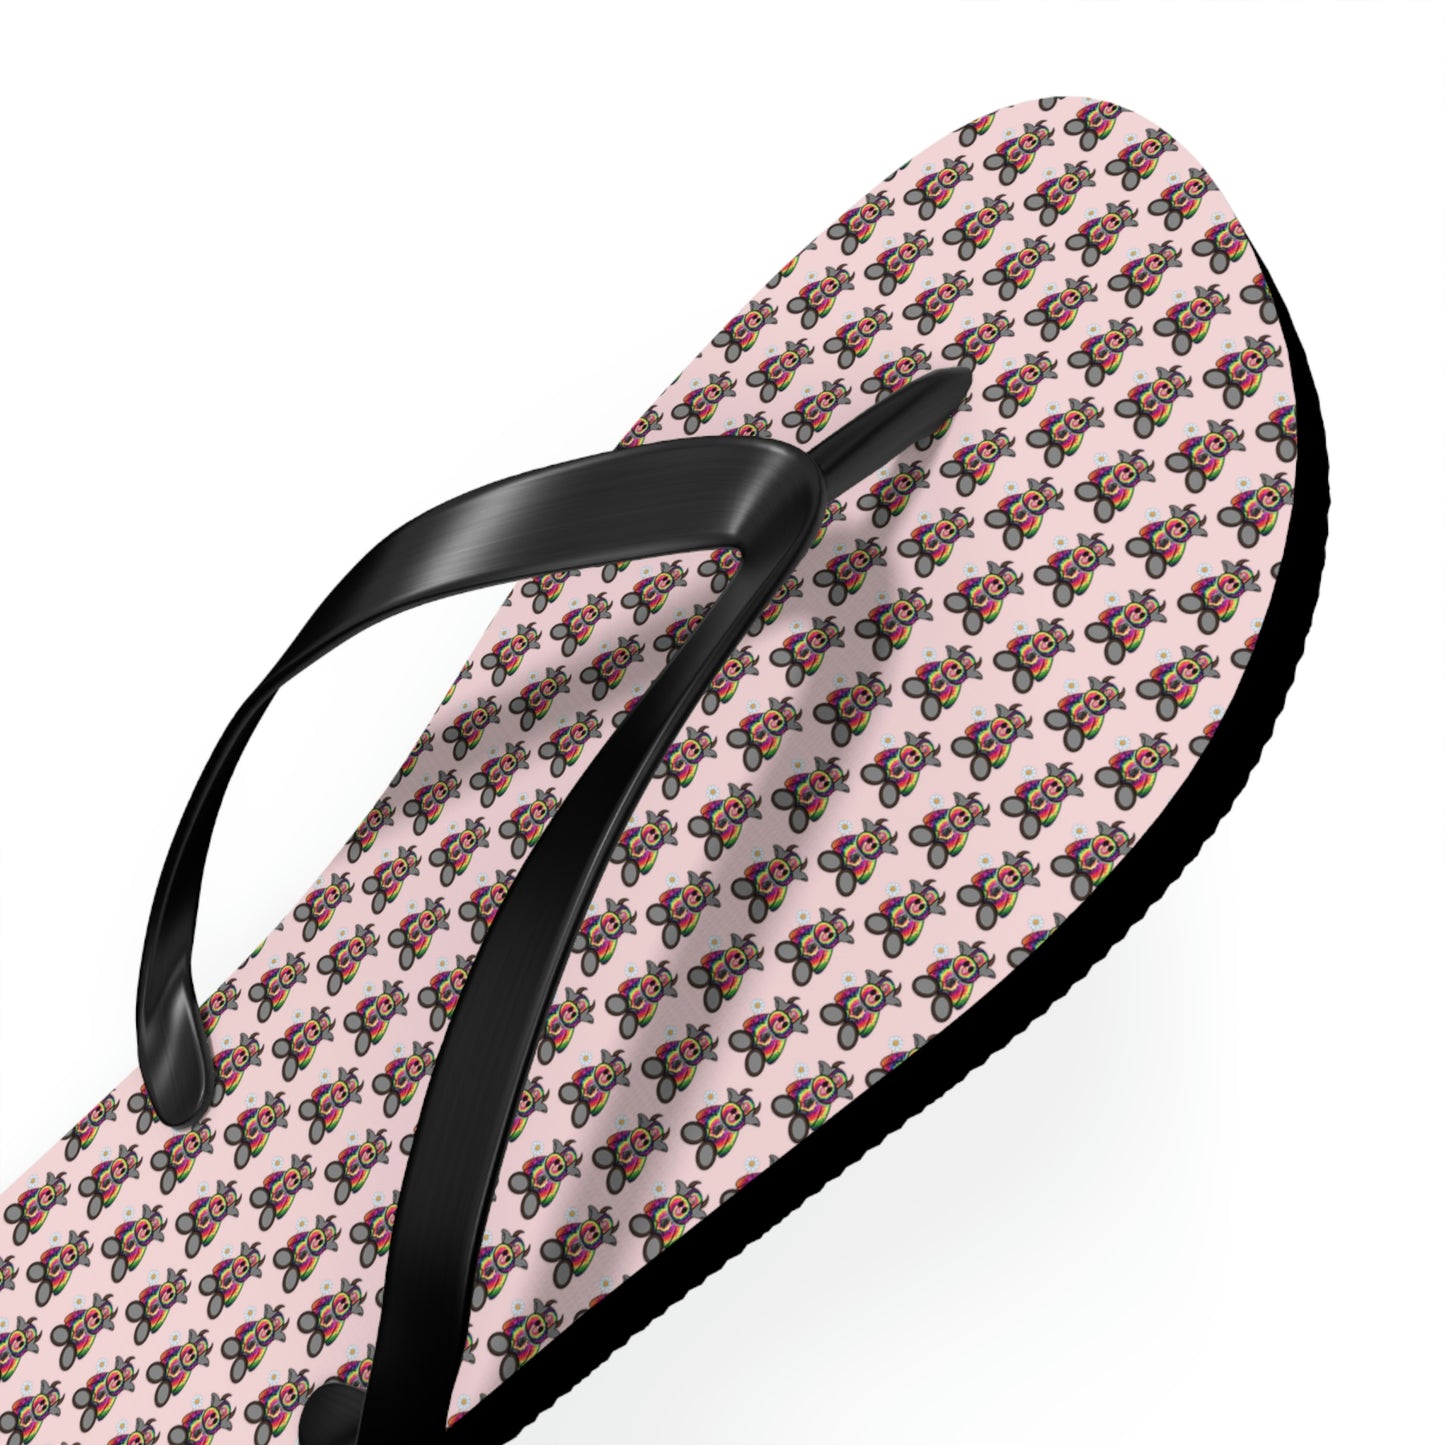 Pink Pattern Flip Flops